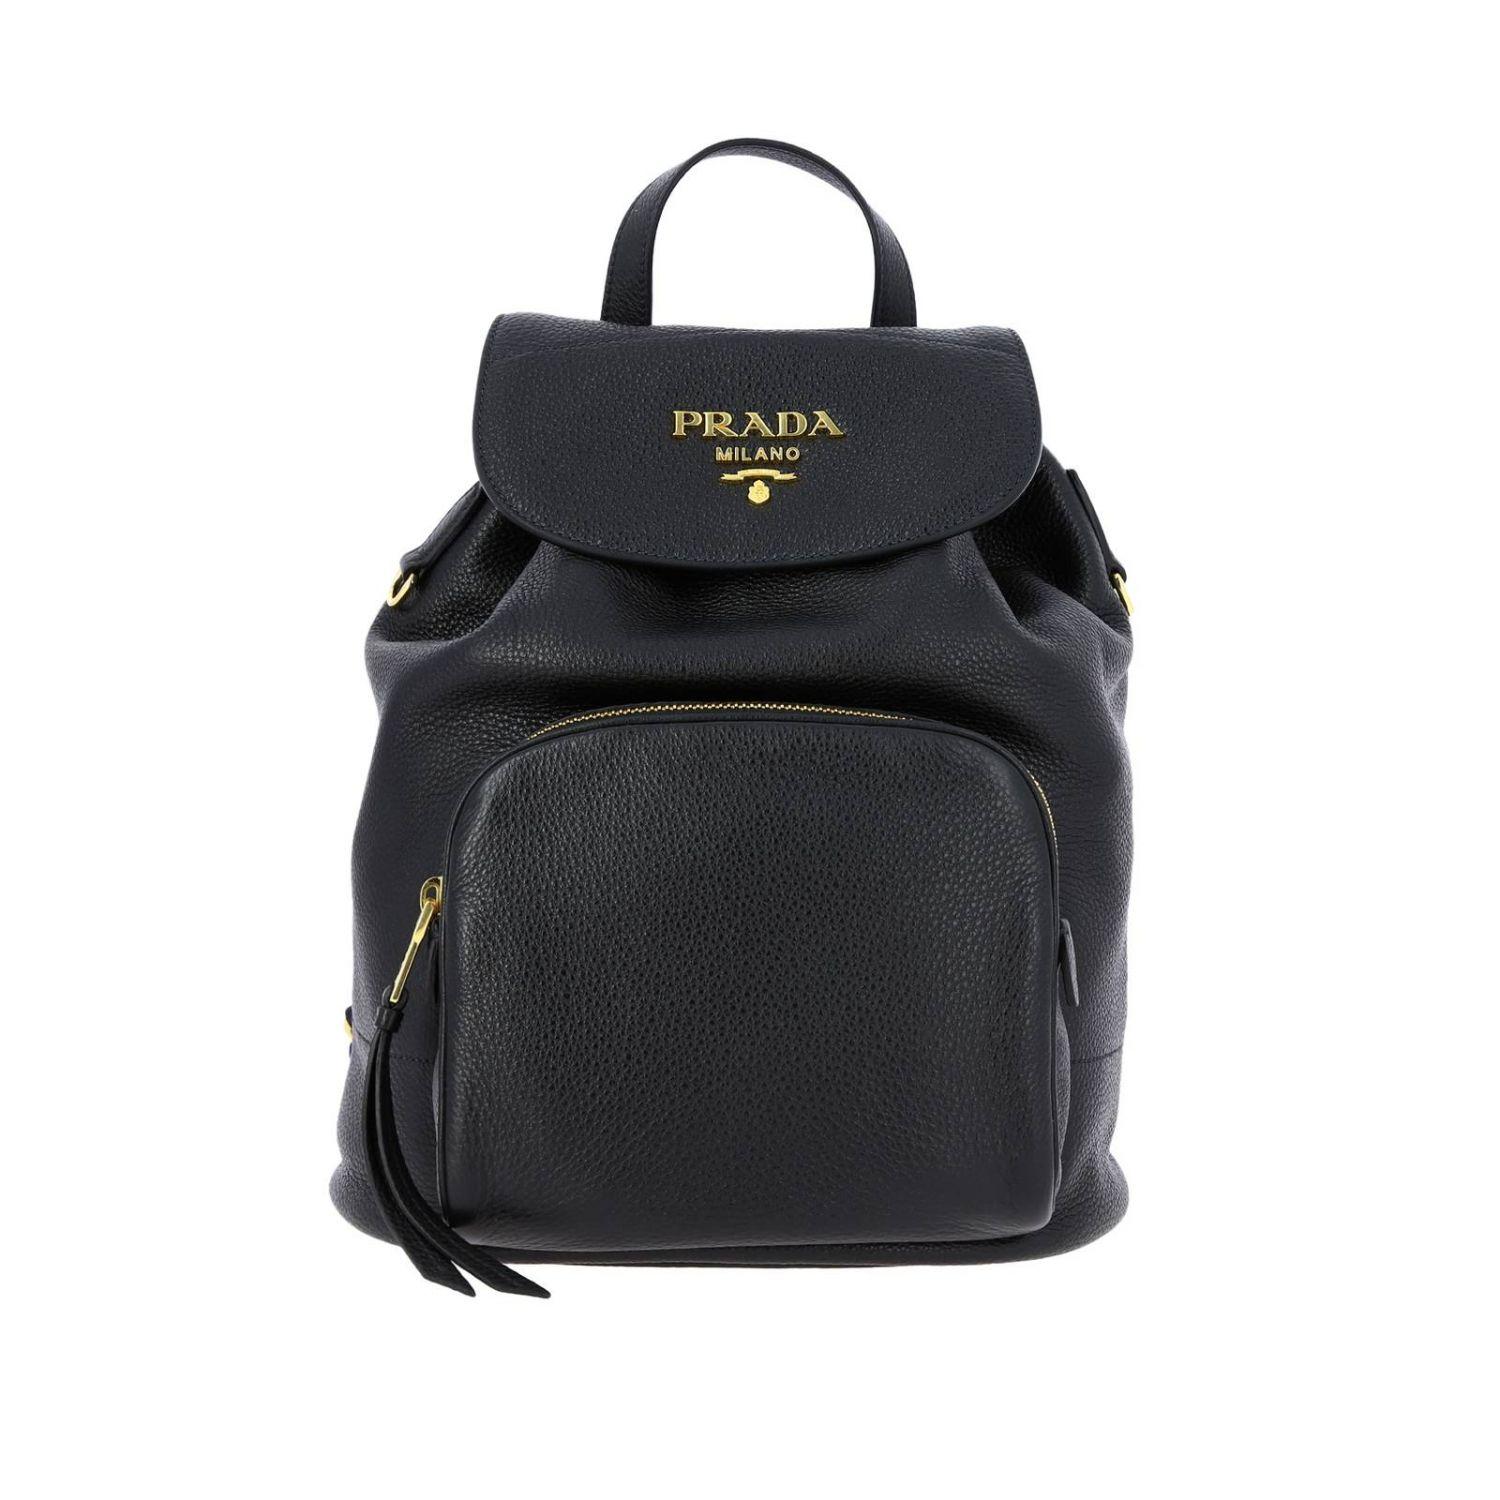 Prada Backpack Shoulder Bag Women in Black - Lyst